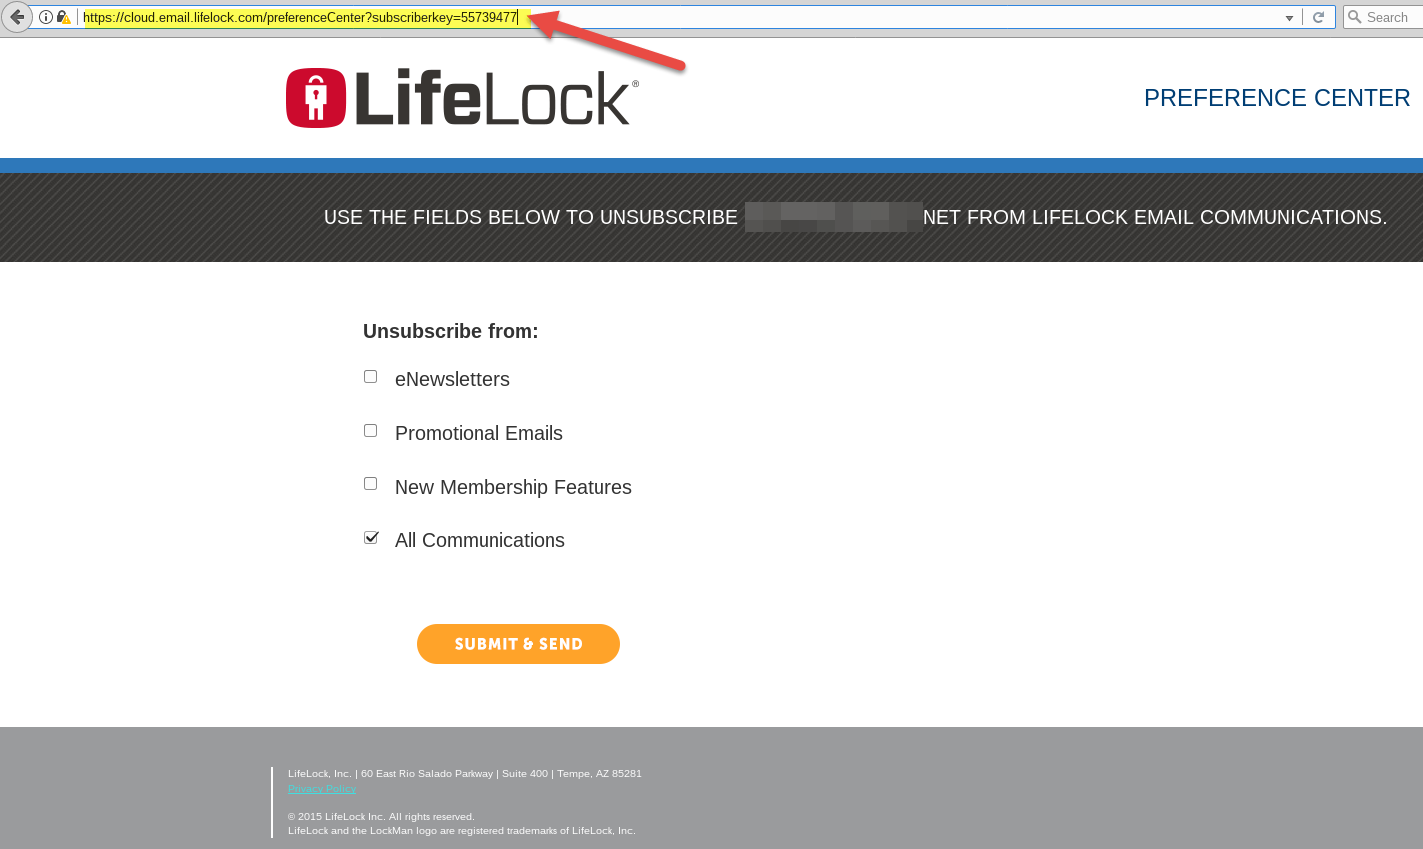 NortonLifeLock password breach, Canadian liquor hack, severe